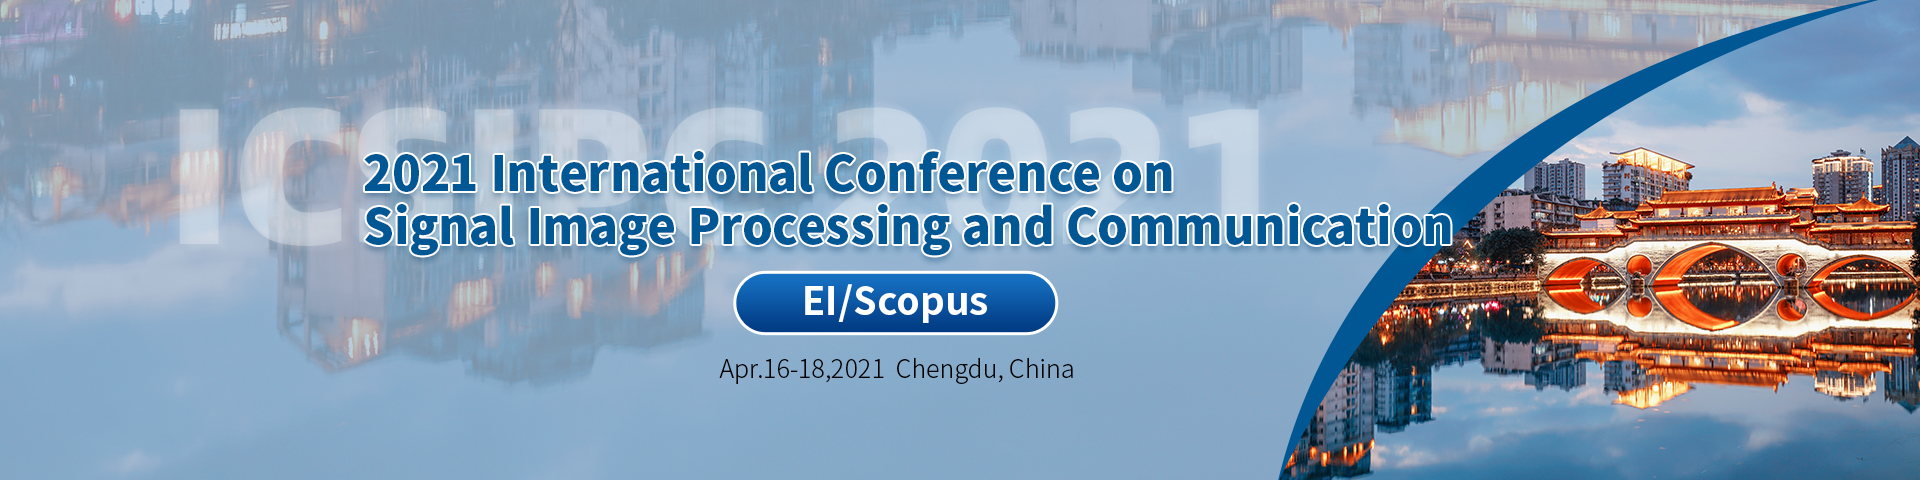 2021 International Conference on Signal Image Processing and Communication（ICSIPC2021）, Chengdu, Sichuan, China